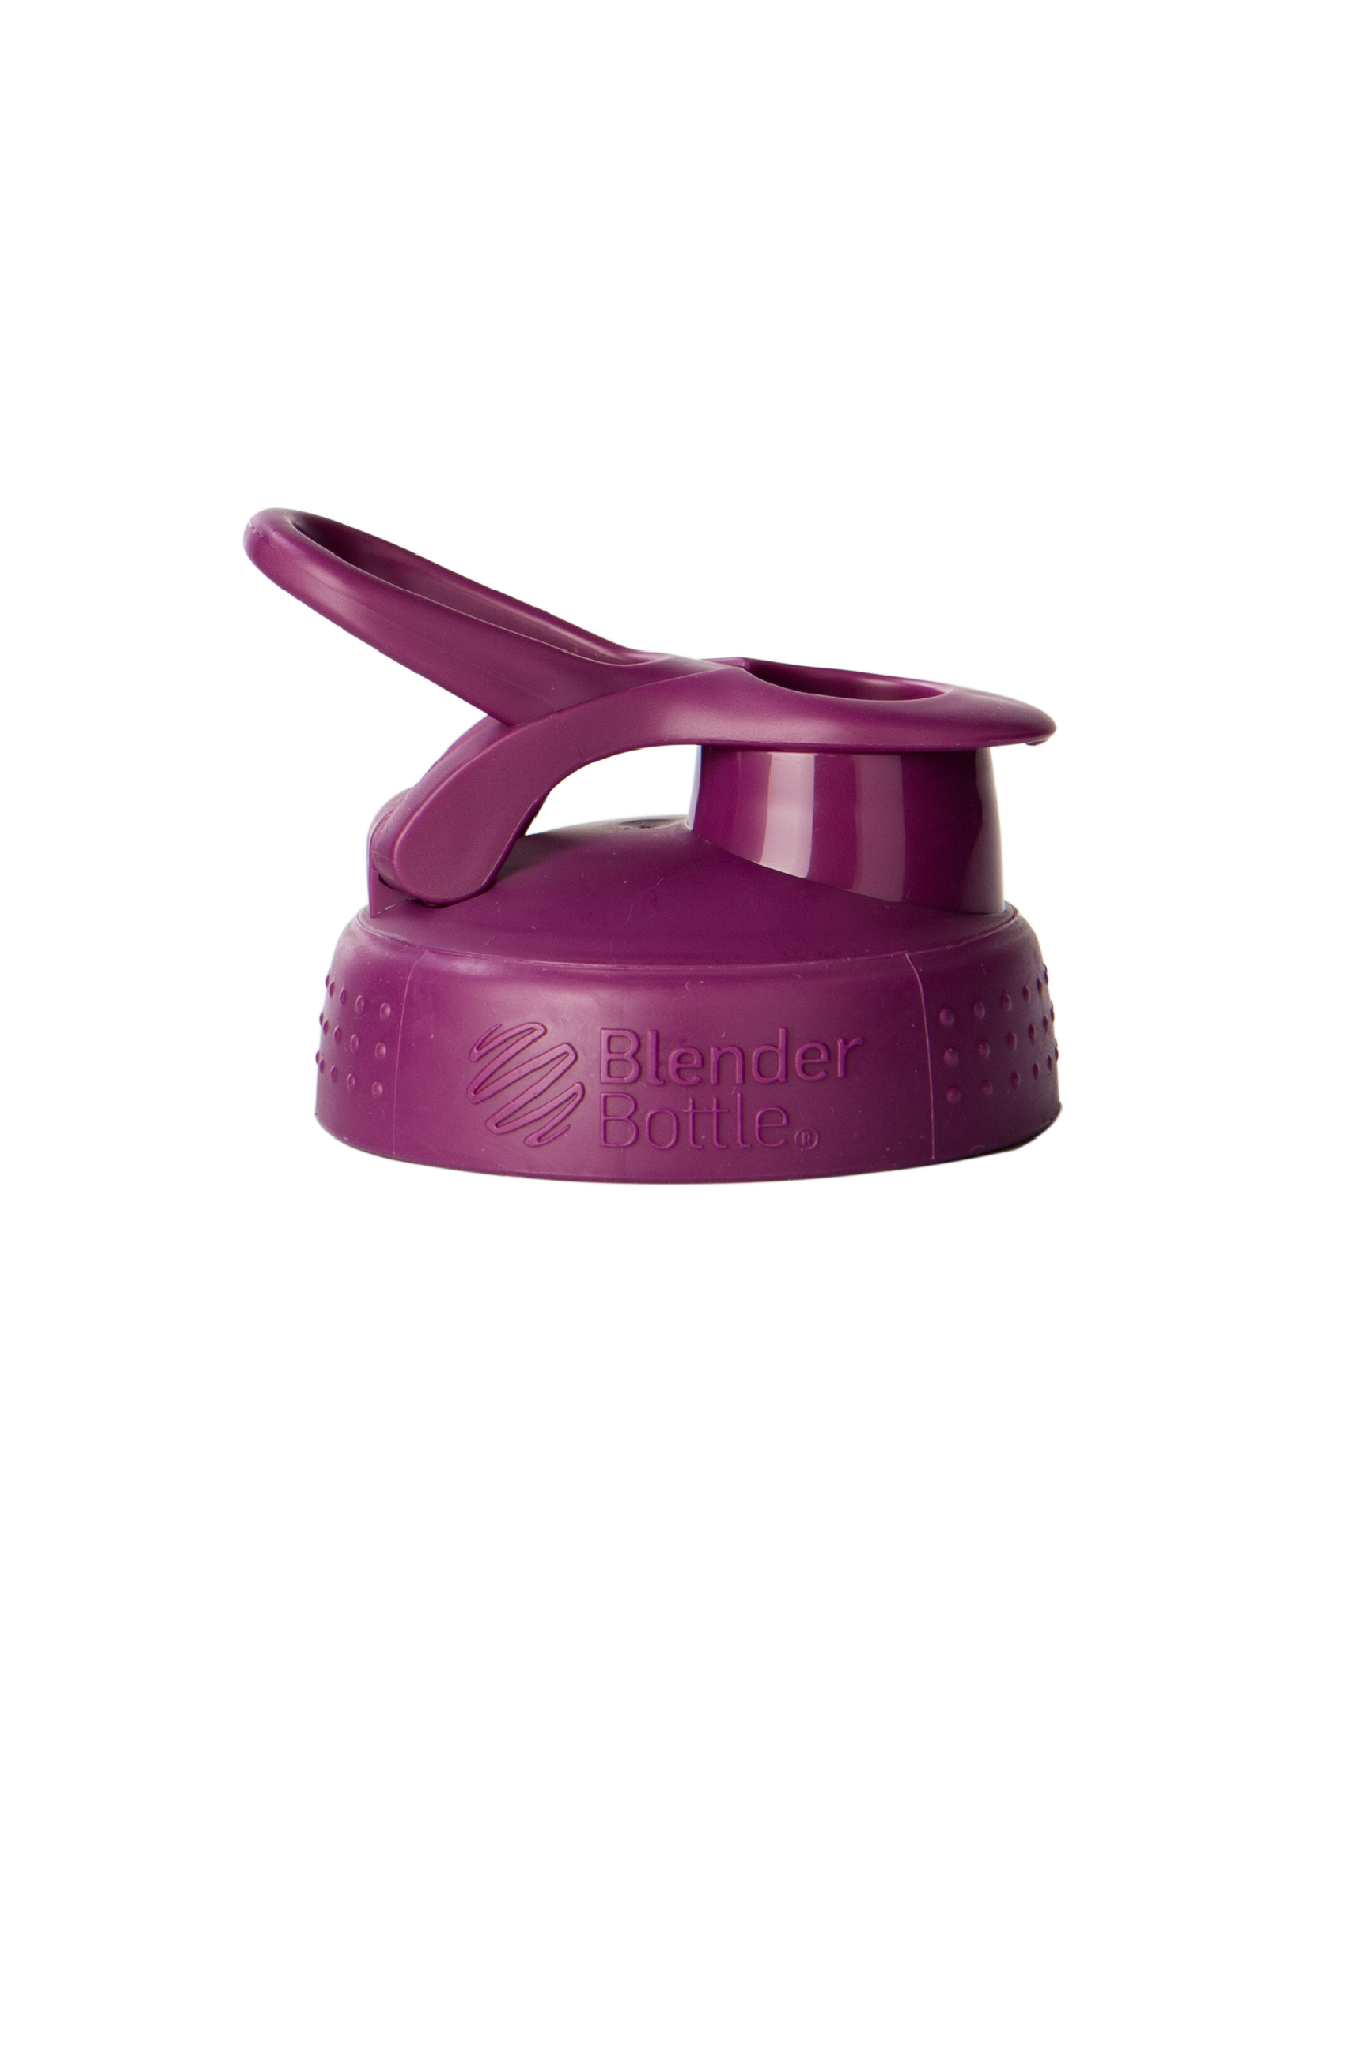 SportMixer Shaker Cup Replacement Lid in plum purple